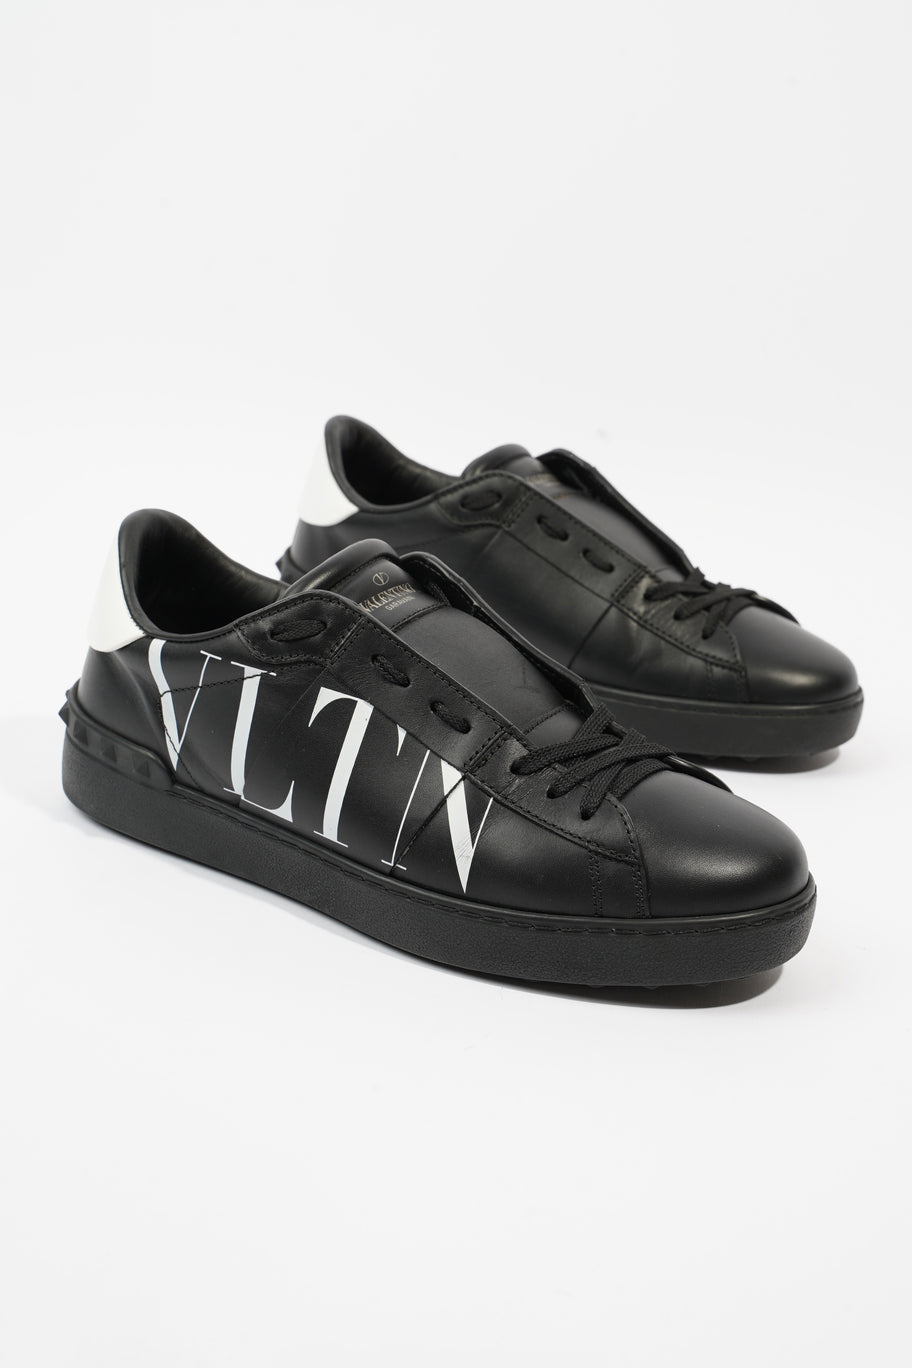 Open VLTN Sneaker Black / White Tab Leather EU 40 UK 6 Image 2